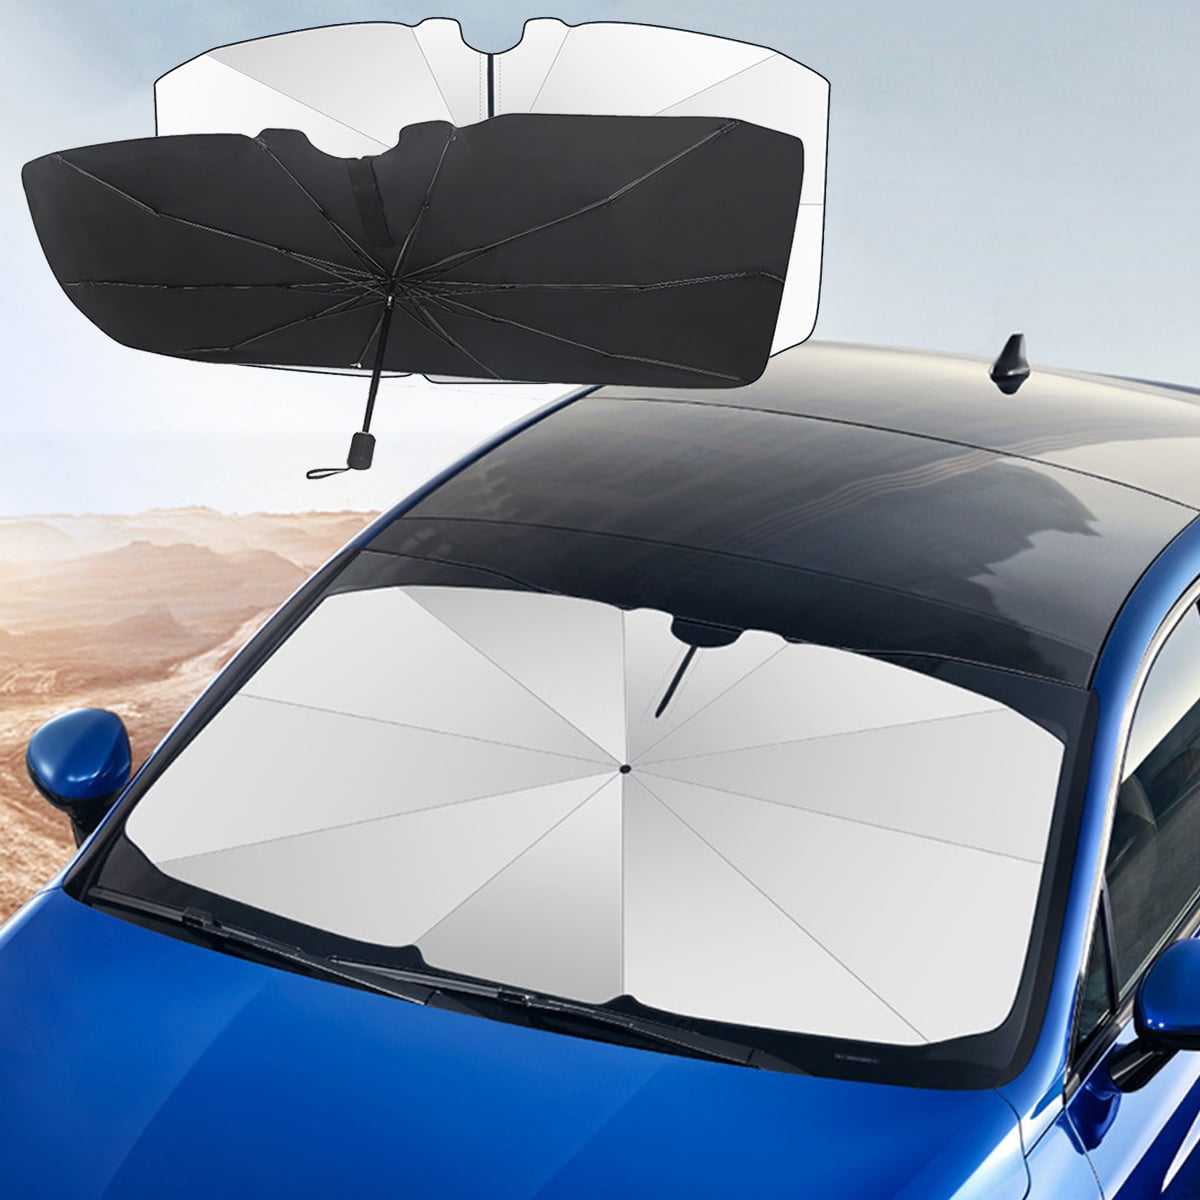 Ajxn Car Windshield Sun Shade Umbrella UV Protection Car to Keep Your Vehicle Cool Accessories Foldable Shield Medium 55 x 31 at MechanicSurplus.com